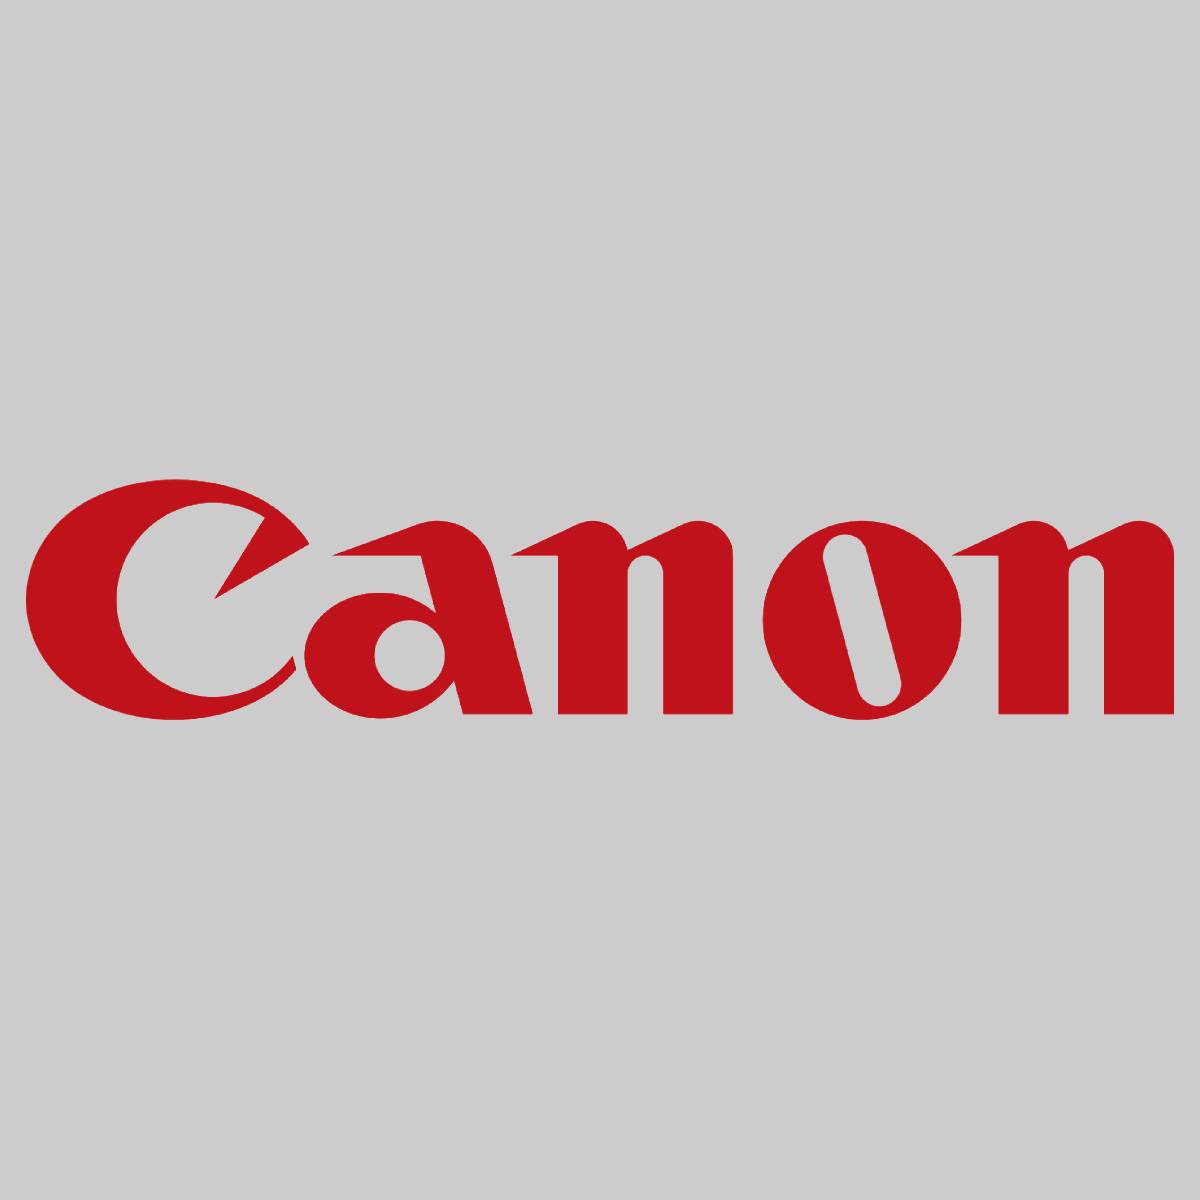 "Original Canon Laser Scanner Assy FM1-F682-000 imageRunner 1430 1430J 1435 1435